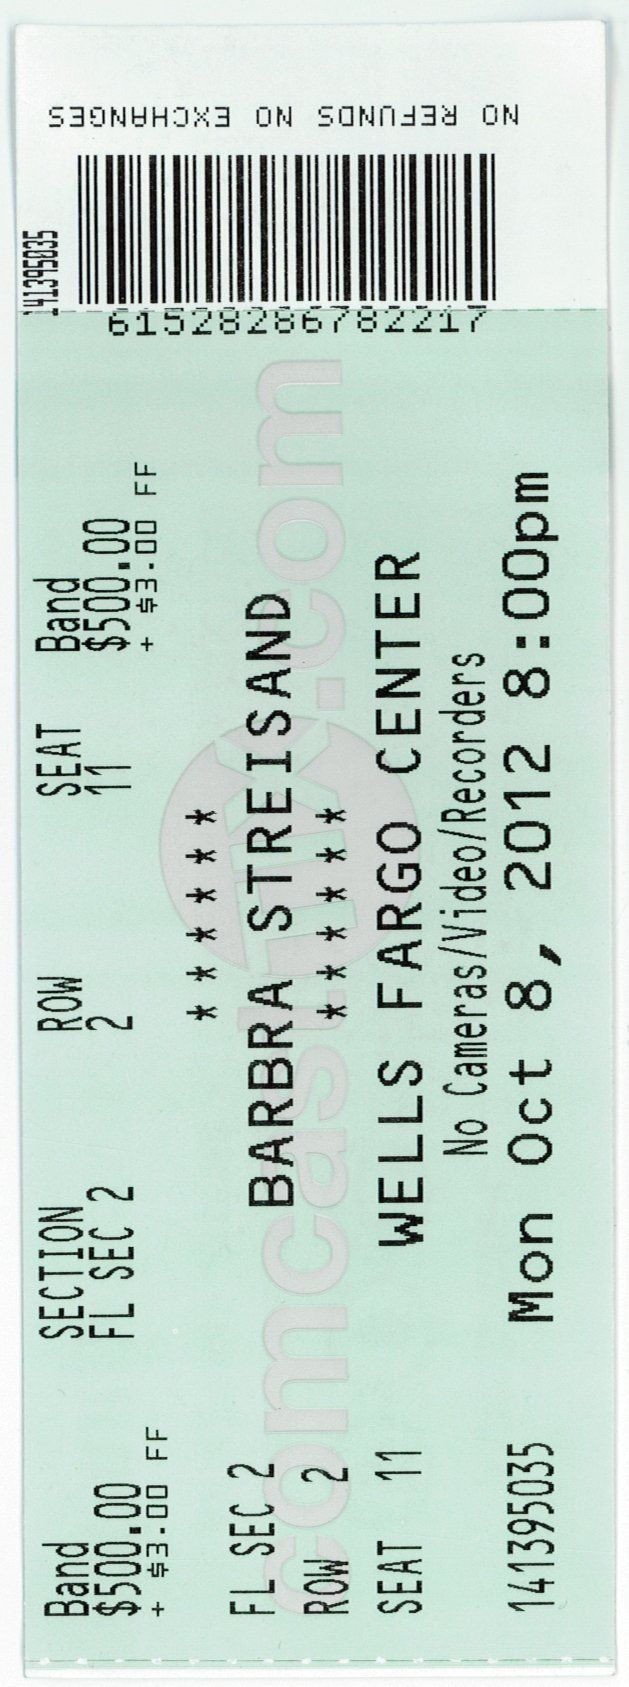 2012 Philadelphia Streisand ticket stub